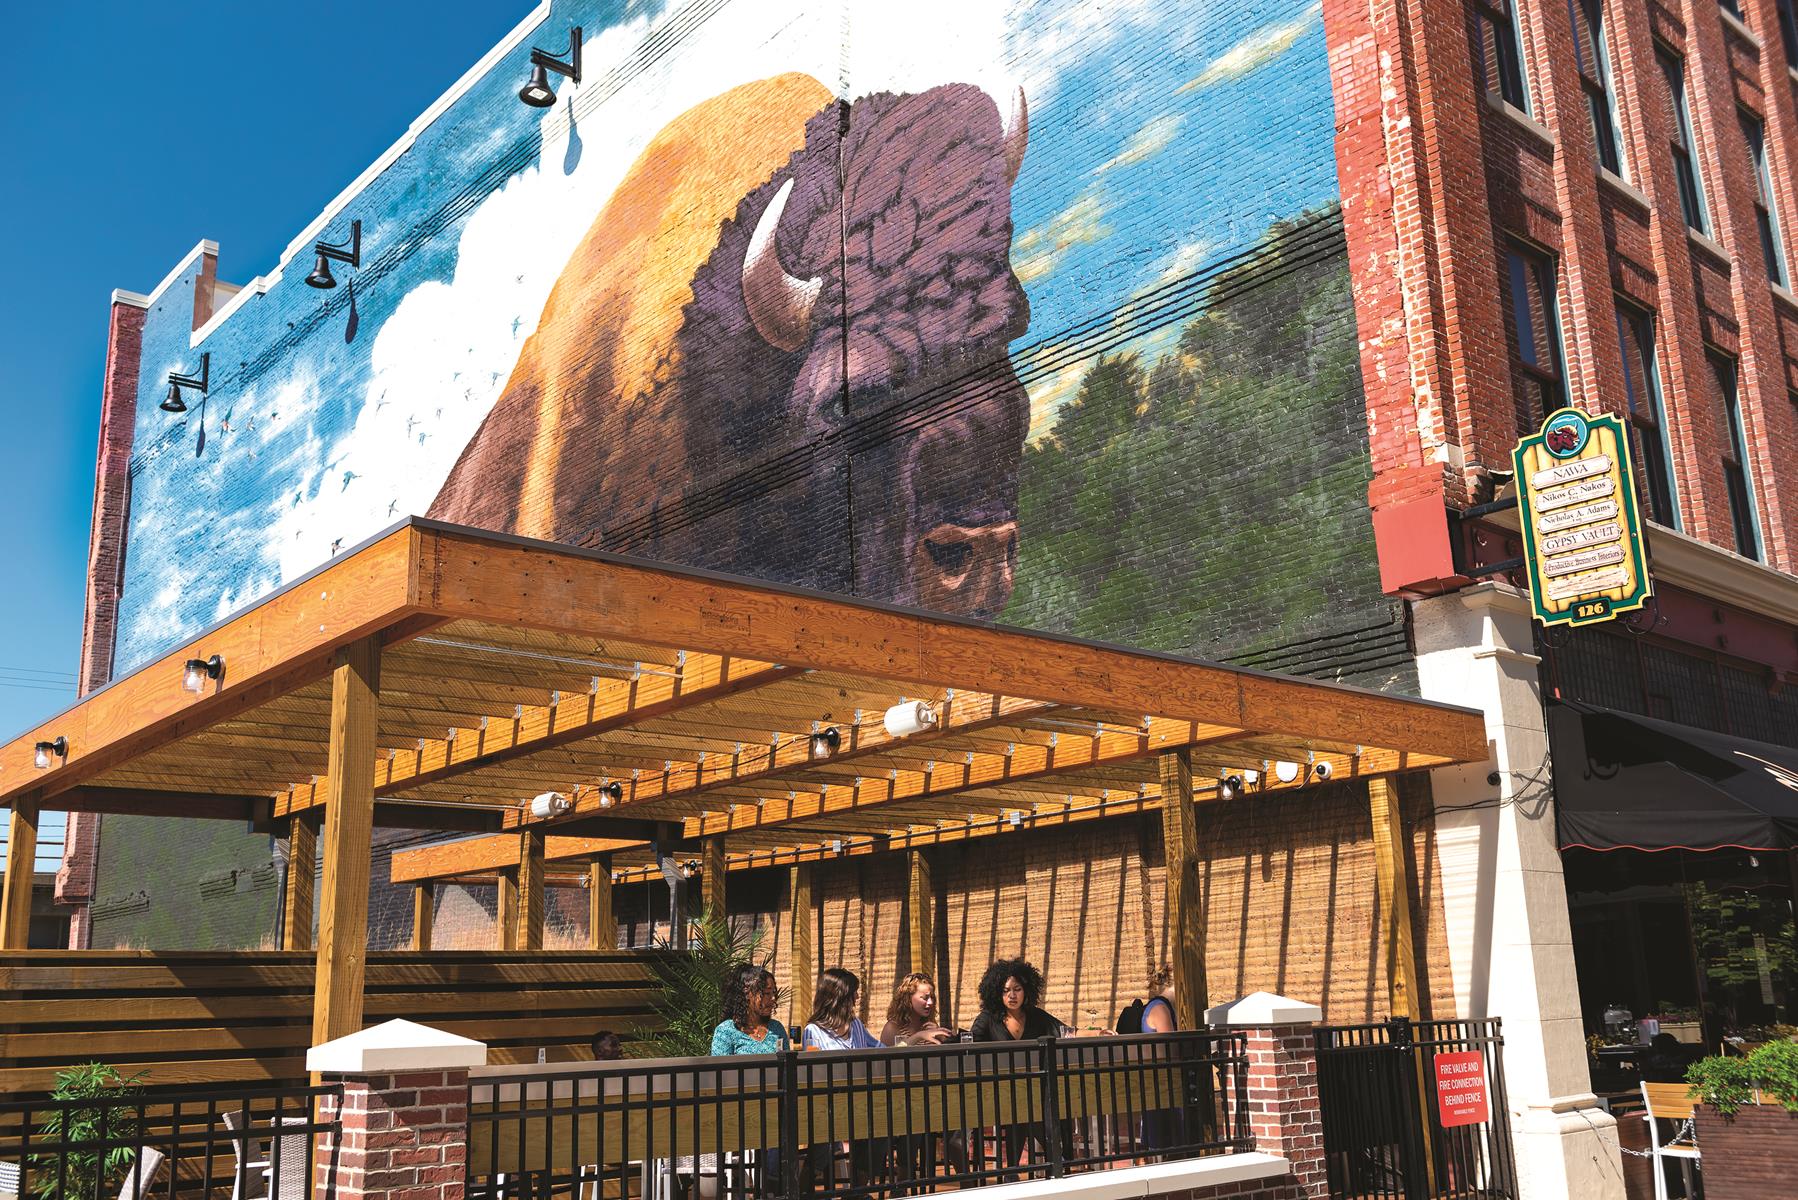 Fort Wayne Outdoor Bison Mural is an example of public art in Indiana